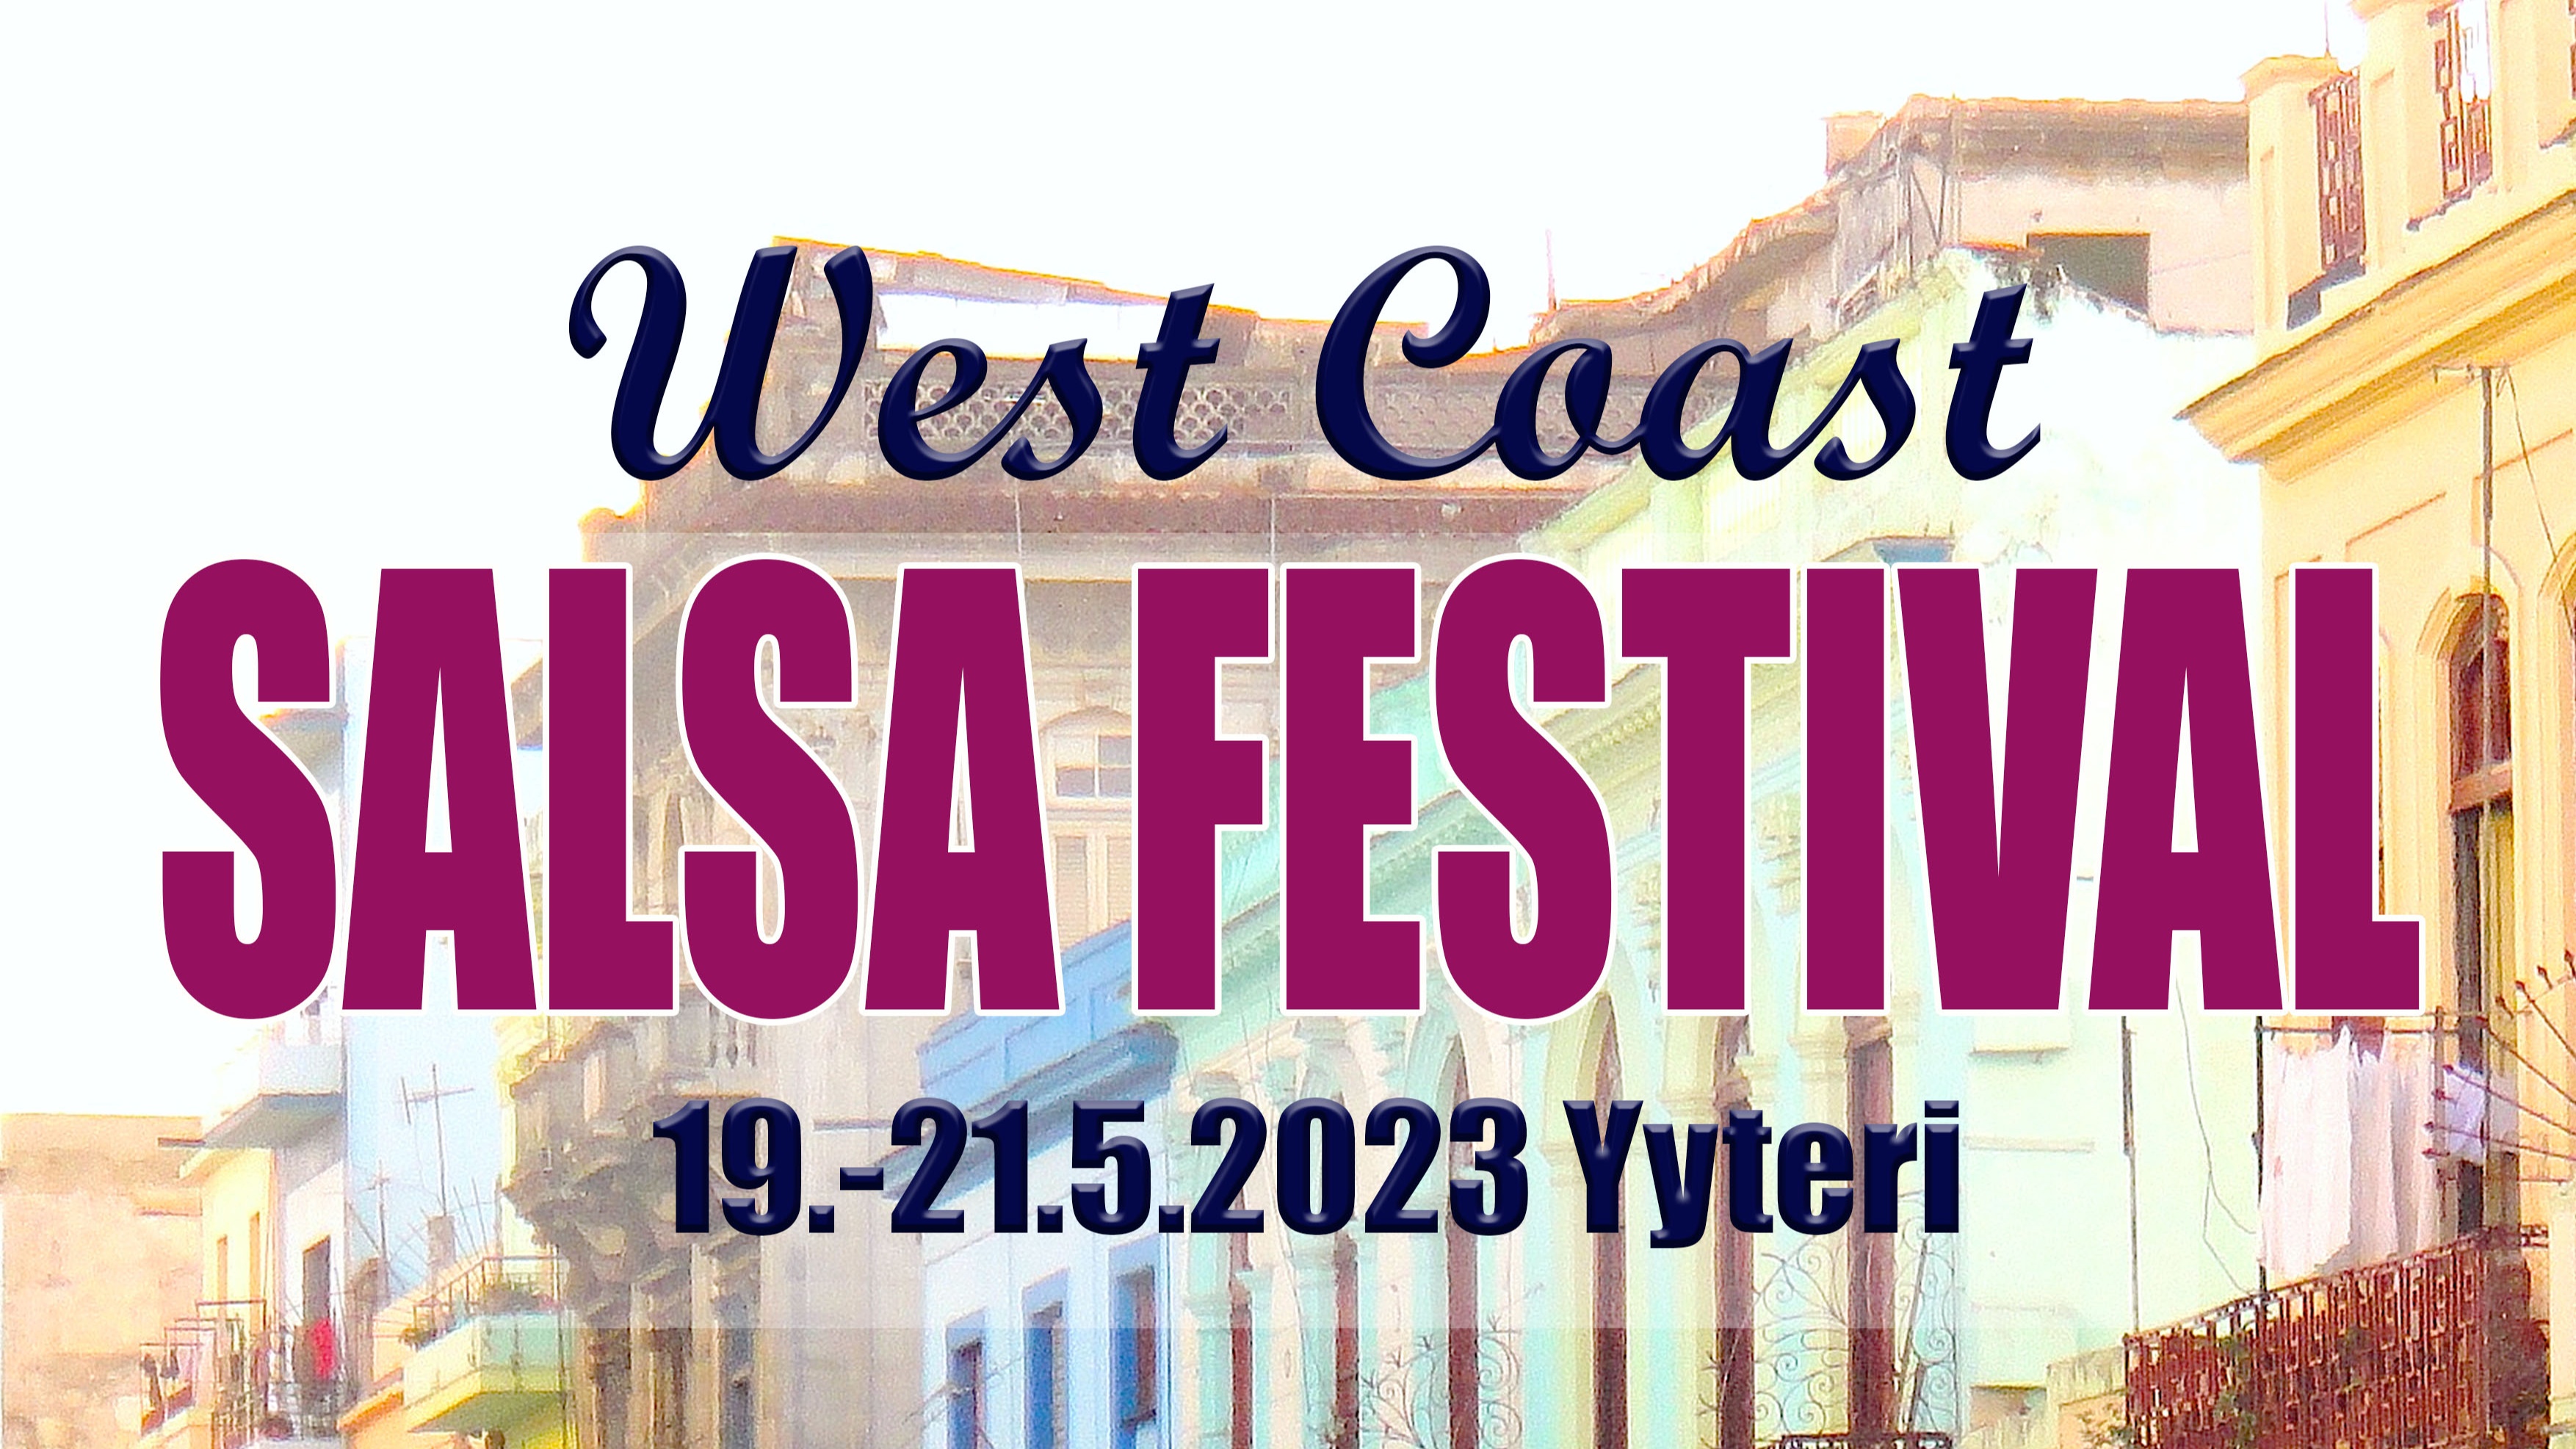 West Coast Salsa Festival 19.-21.5.2023